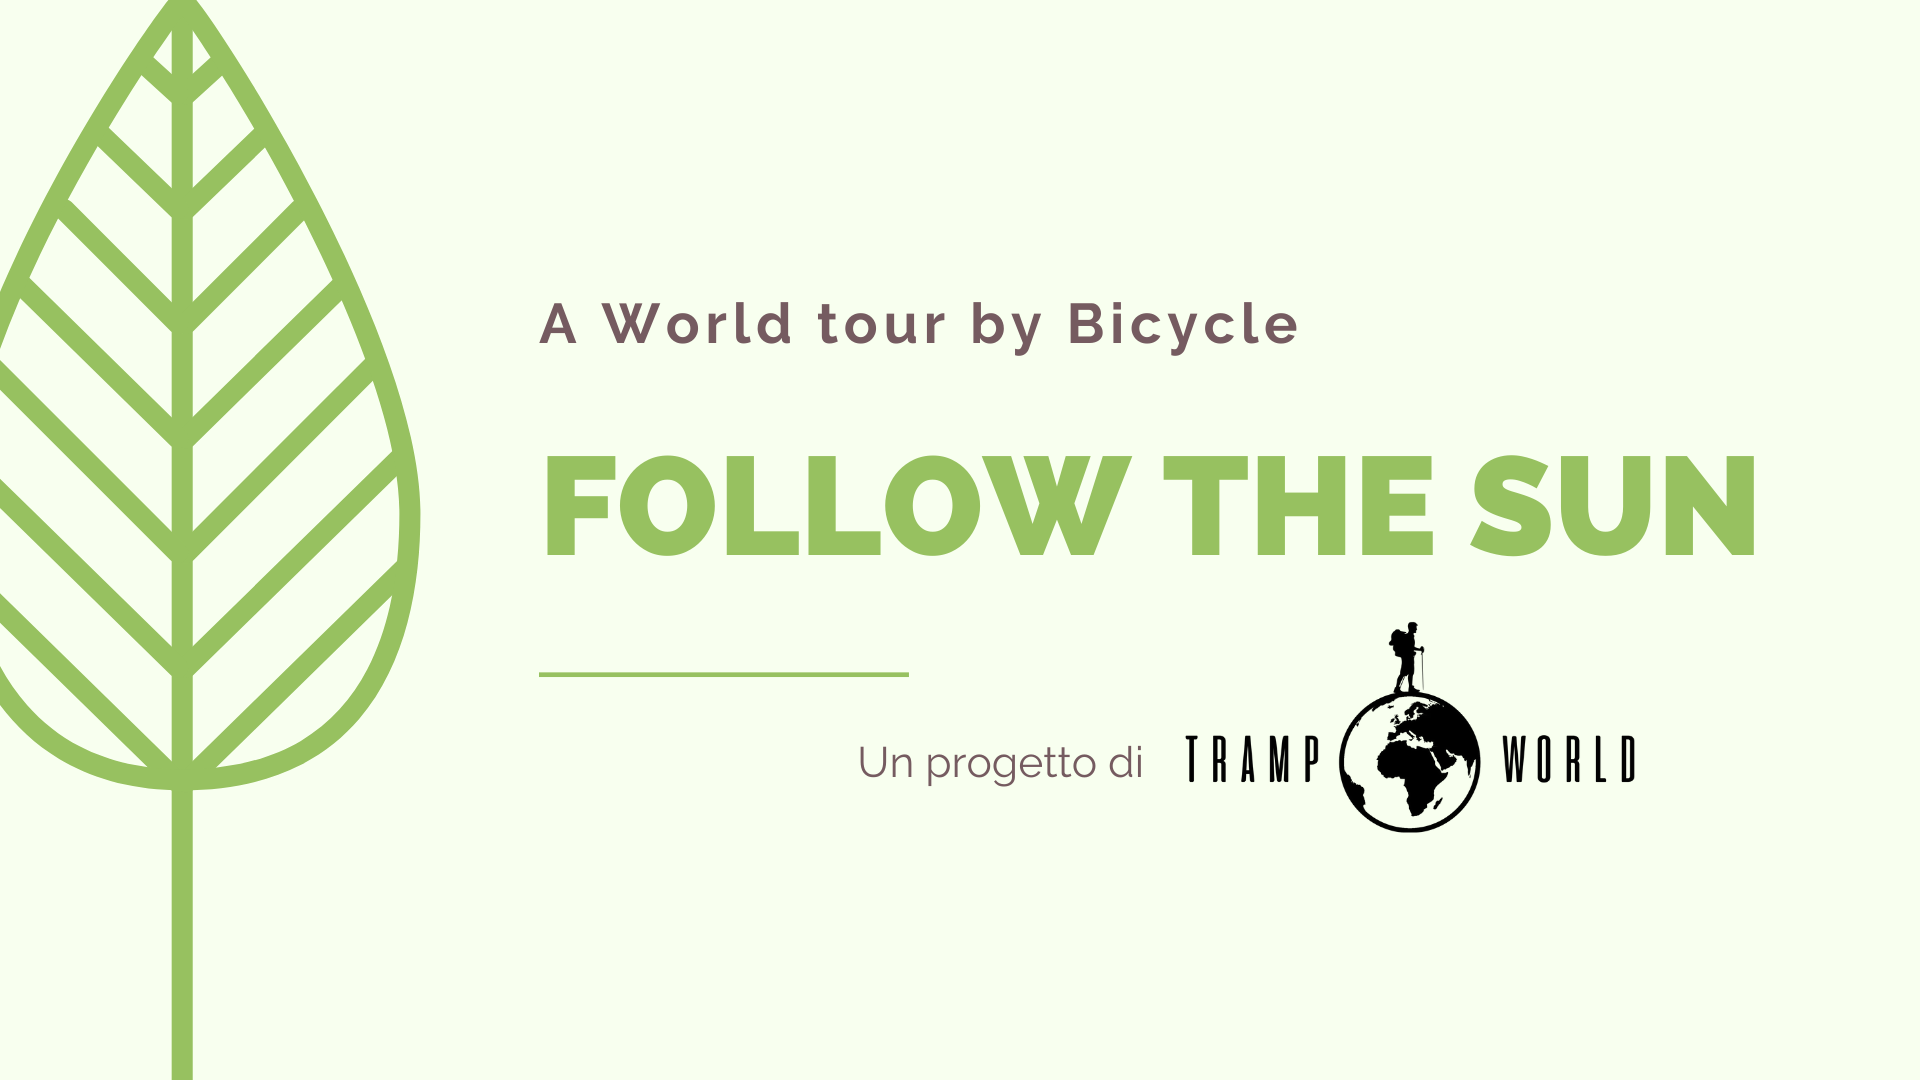 FOLLOW THE SUN world tour by bike for global warming